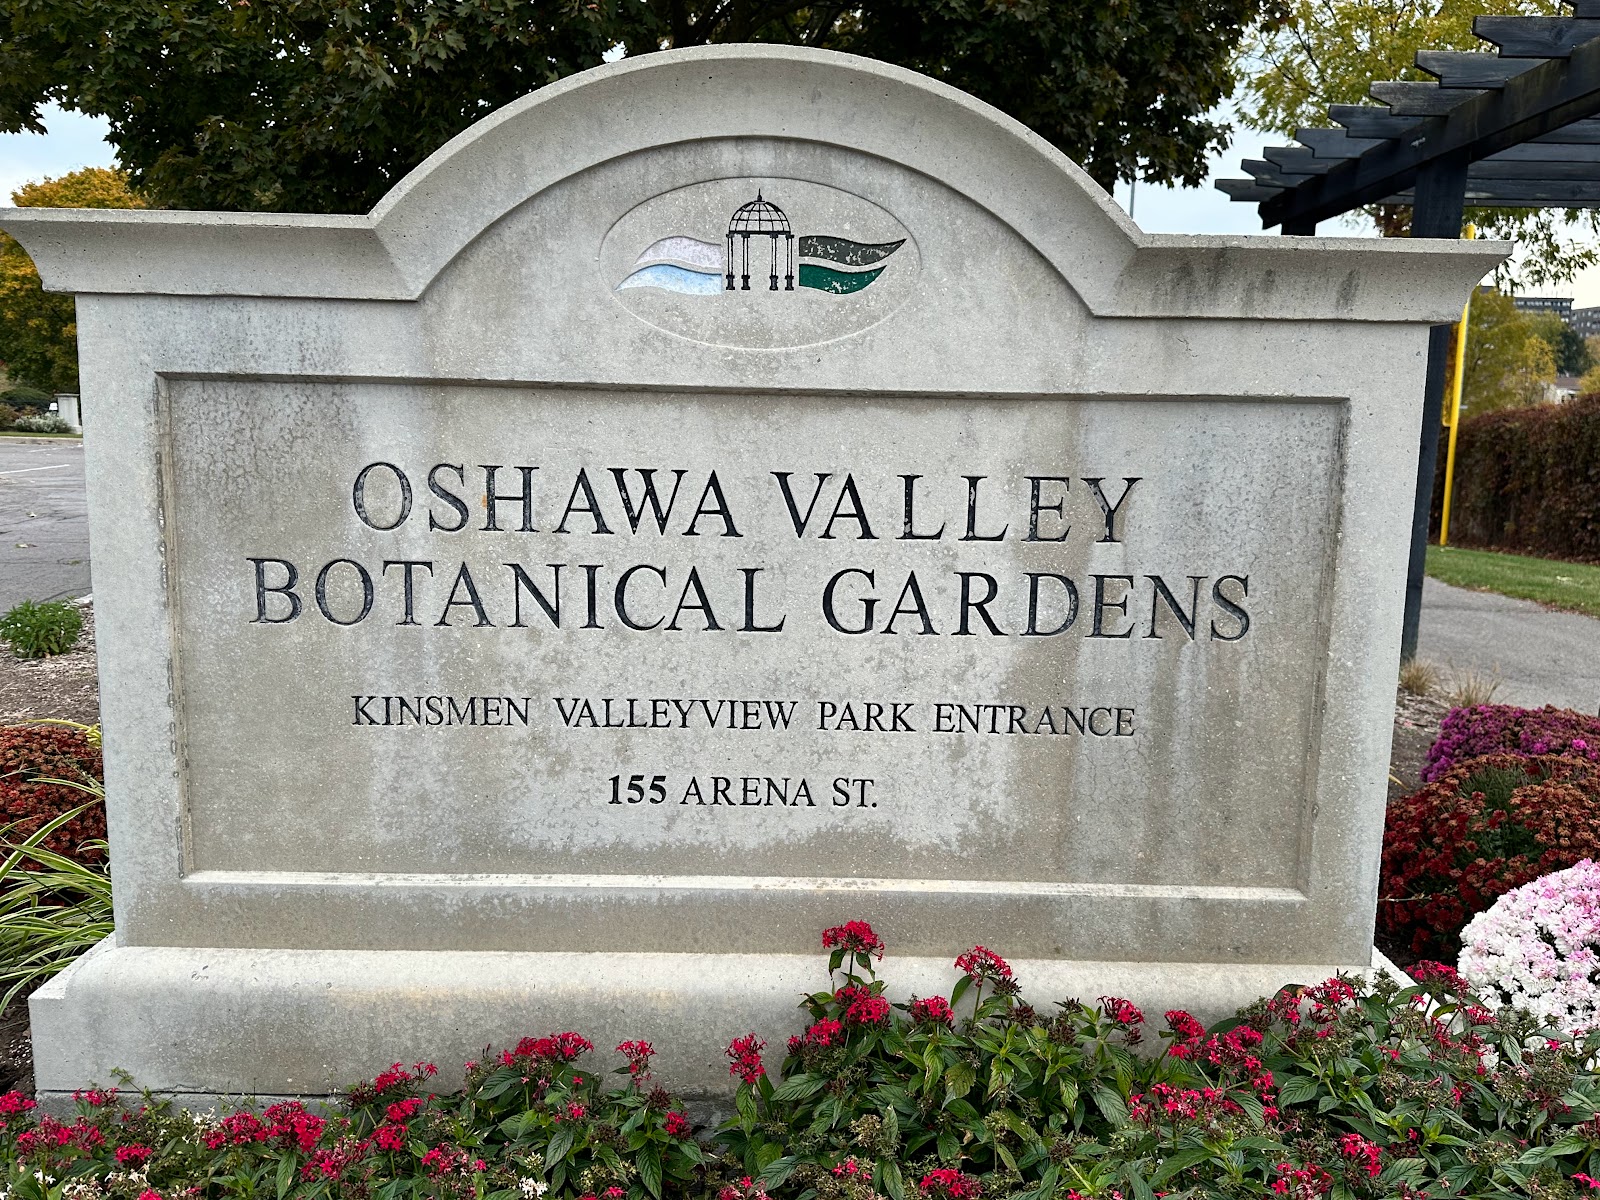 The Oshawa Valley Botanical Gardens